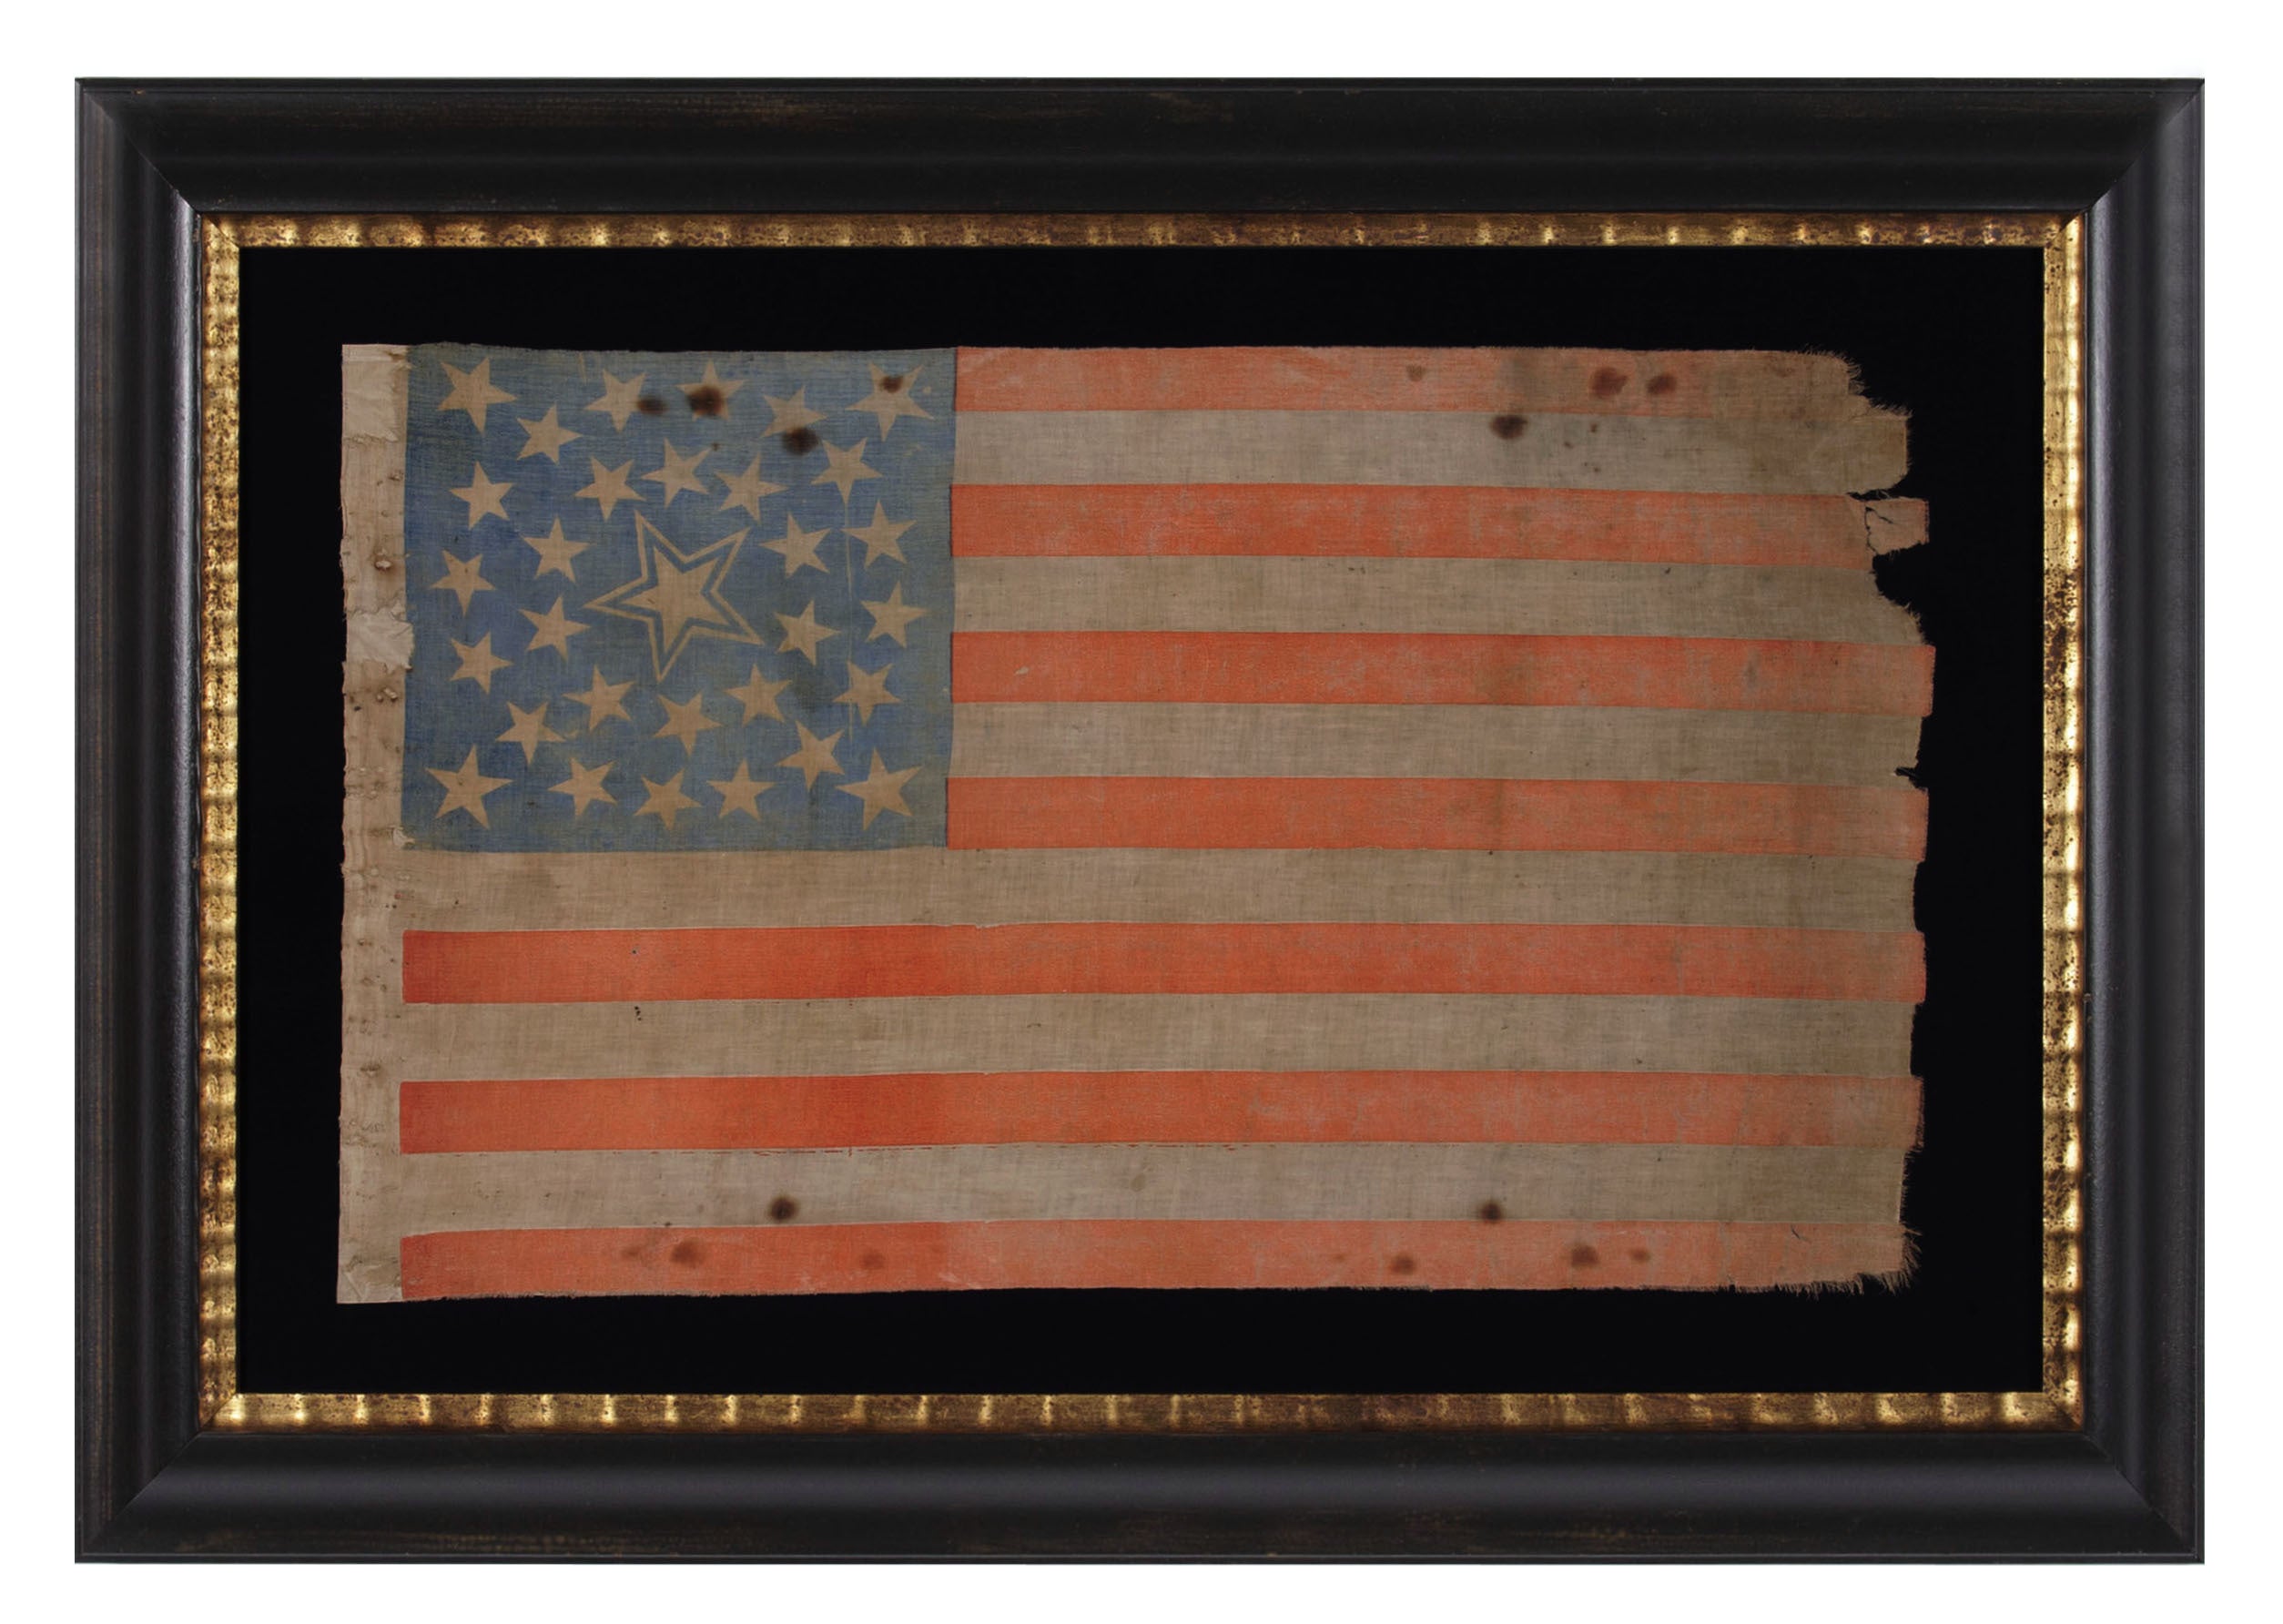 31 Star Antique American Flag, California Statehood, 1850-58, Very Rare